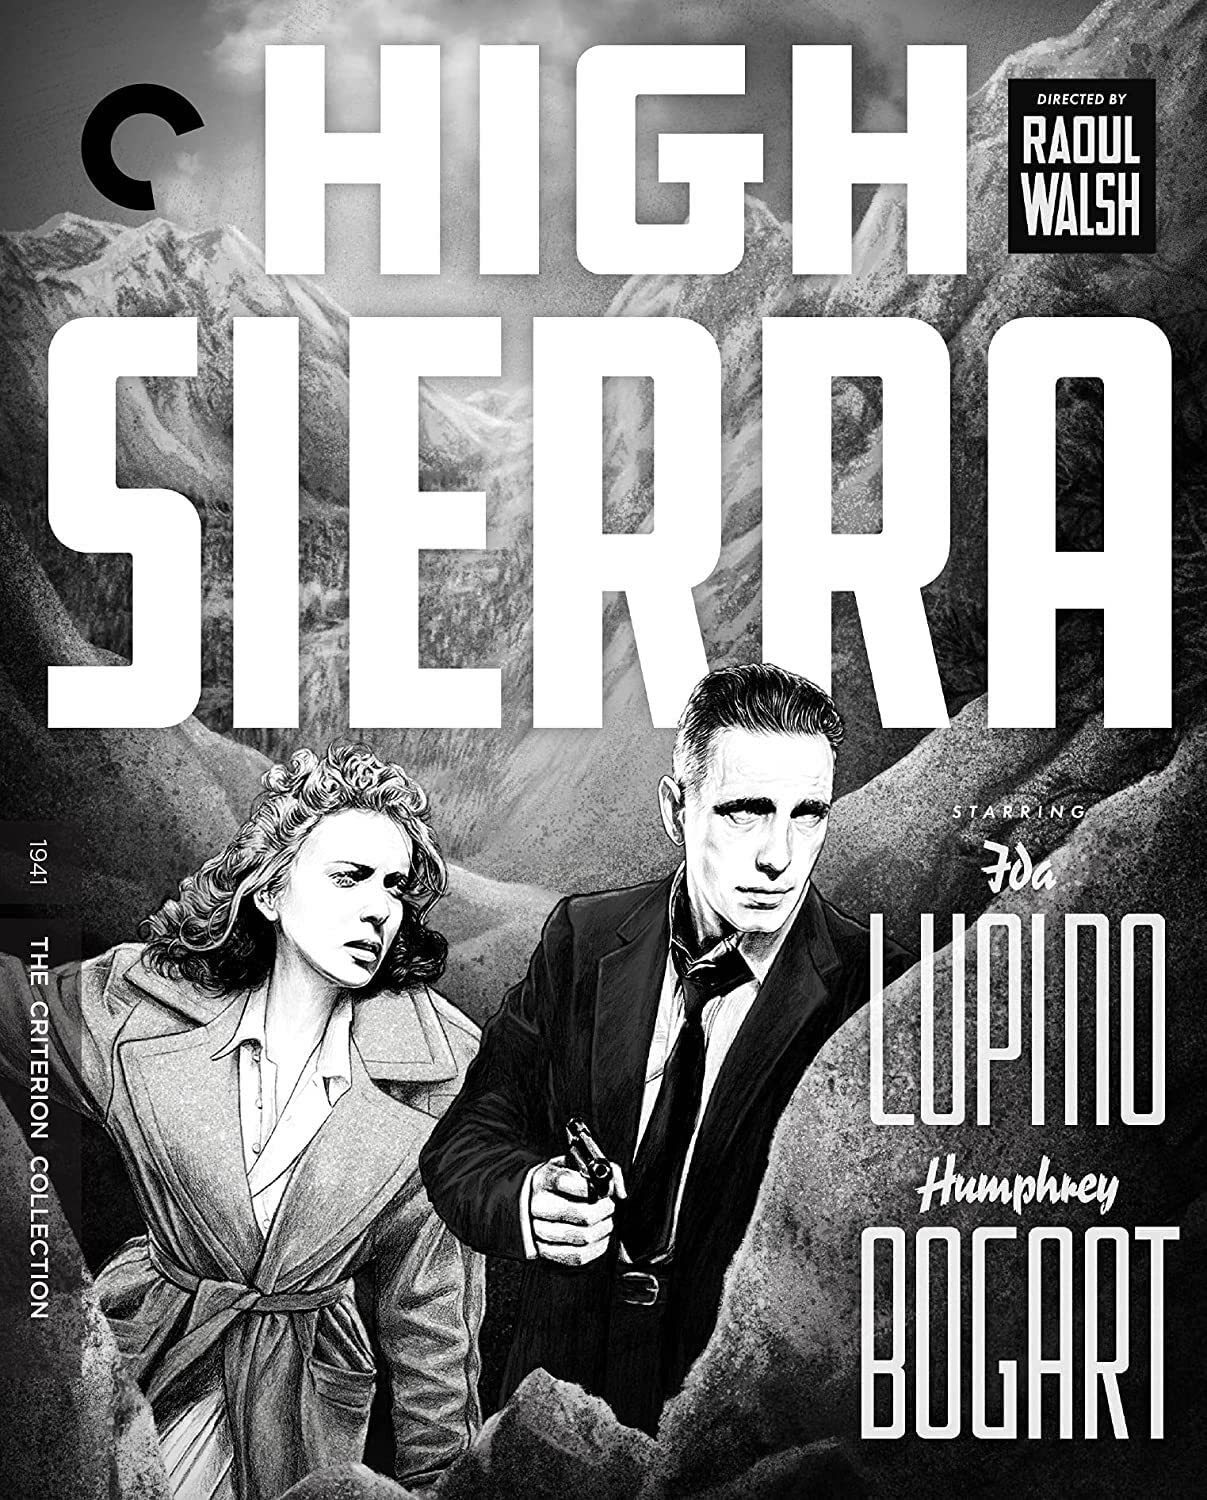 High Sierra (1941) starring Humphrey Bogart, Ida Lupino, Cornel Wilde